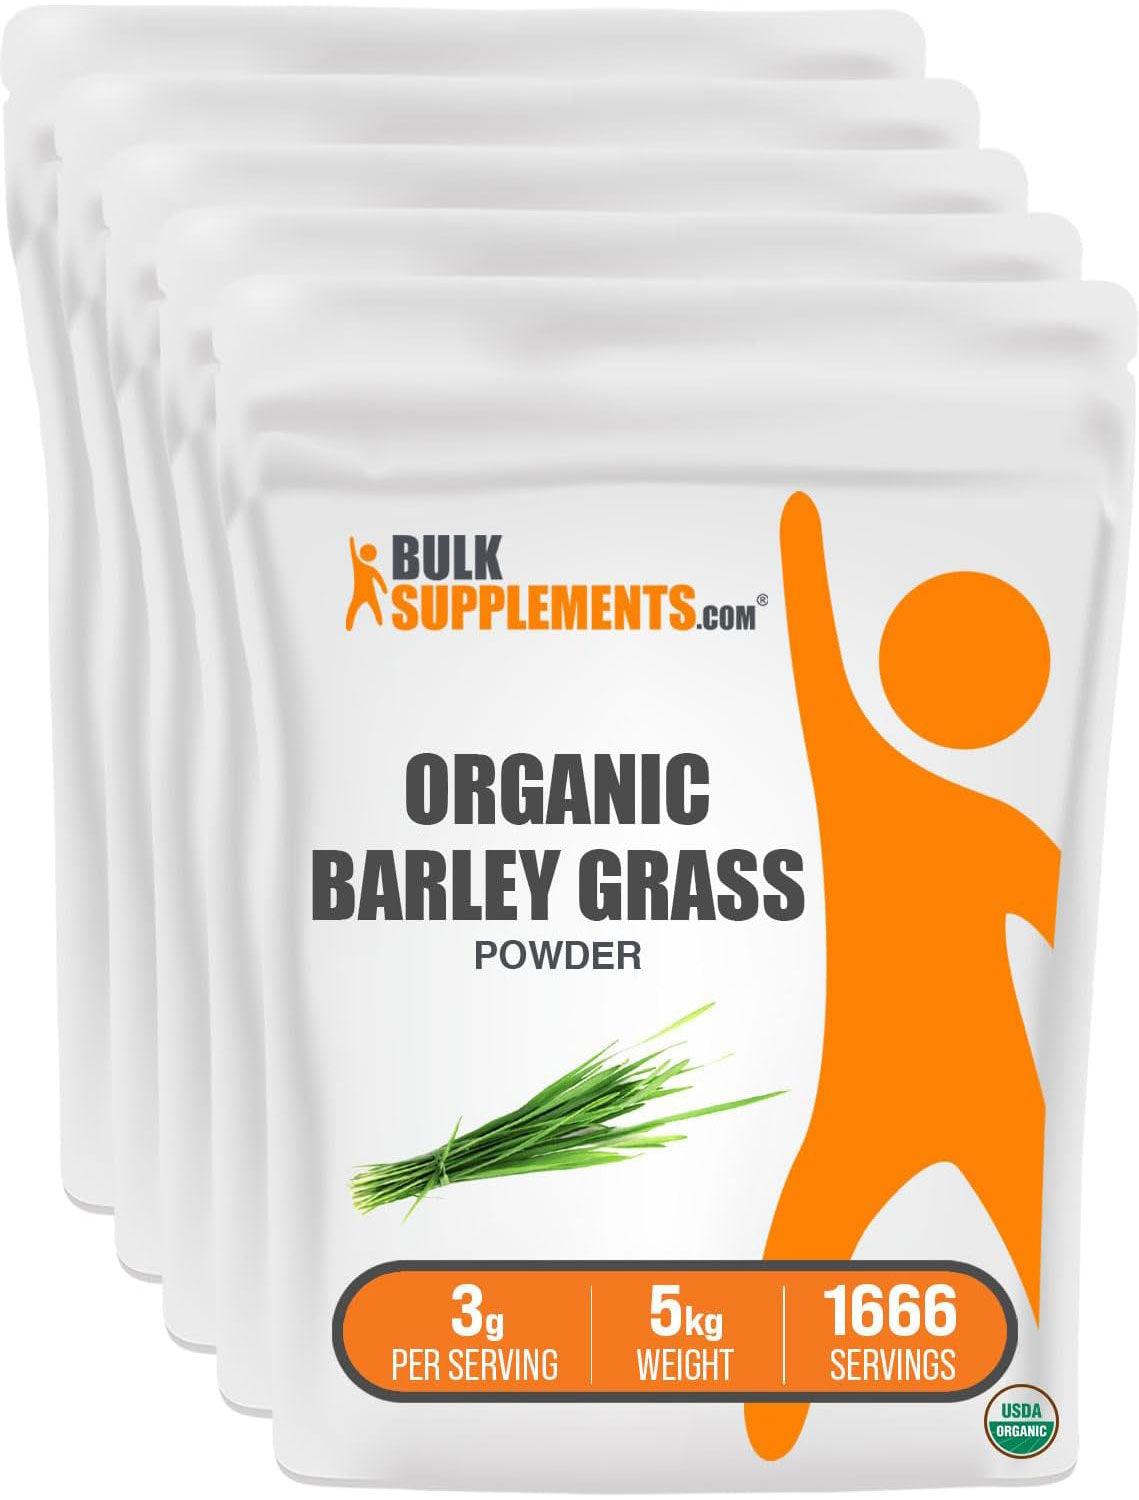 BulkSupplements Organic Barley Grass Powder 5kg bag